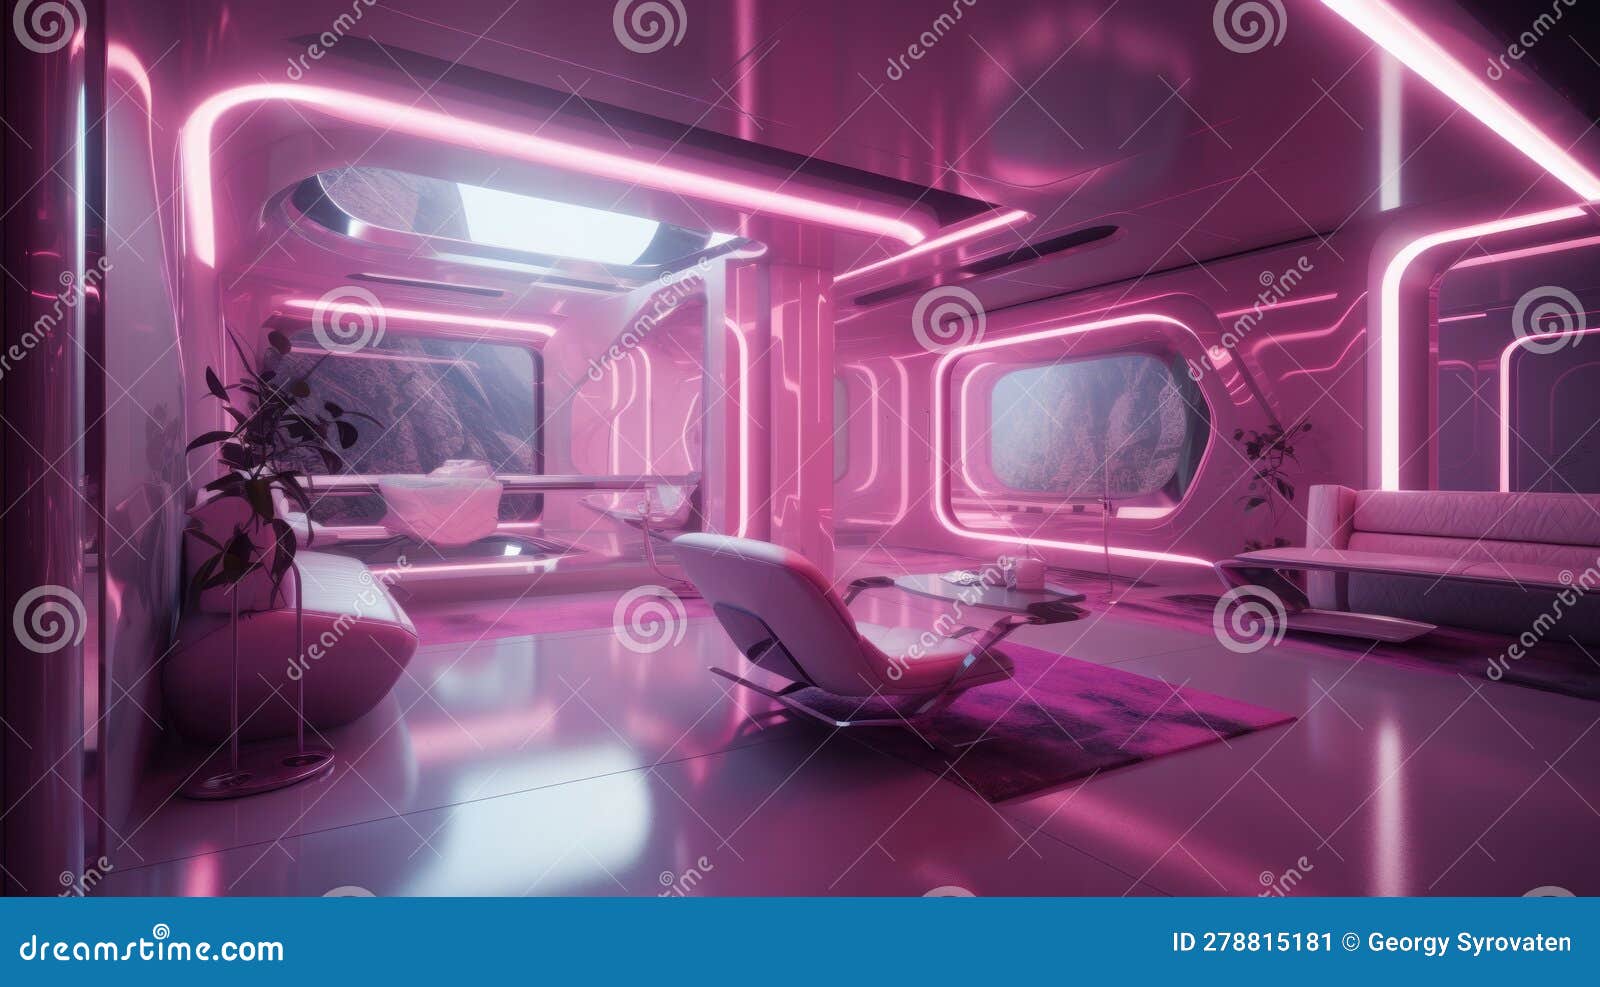 pink & magenta: shiny bionic interior with award-winning 8k hd desig